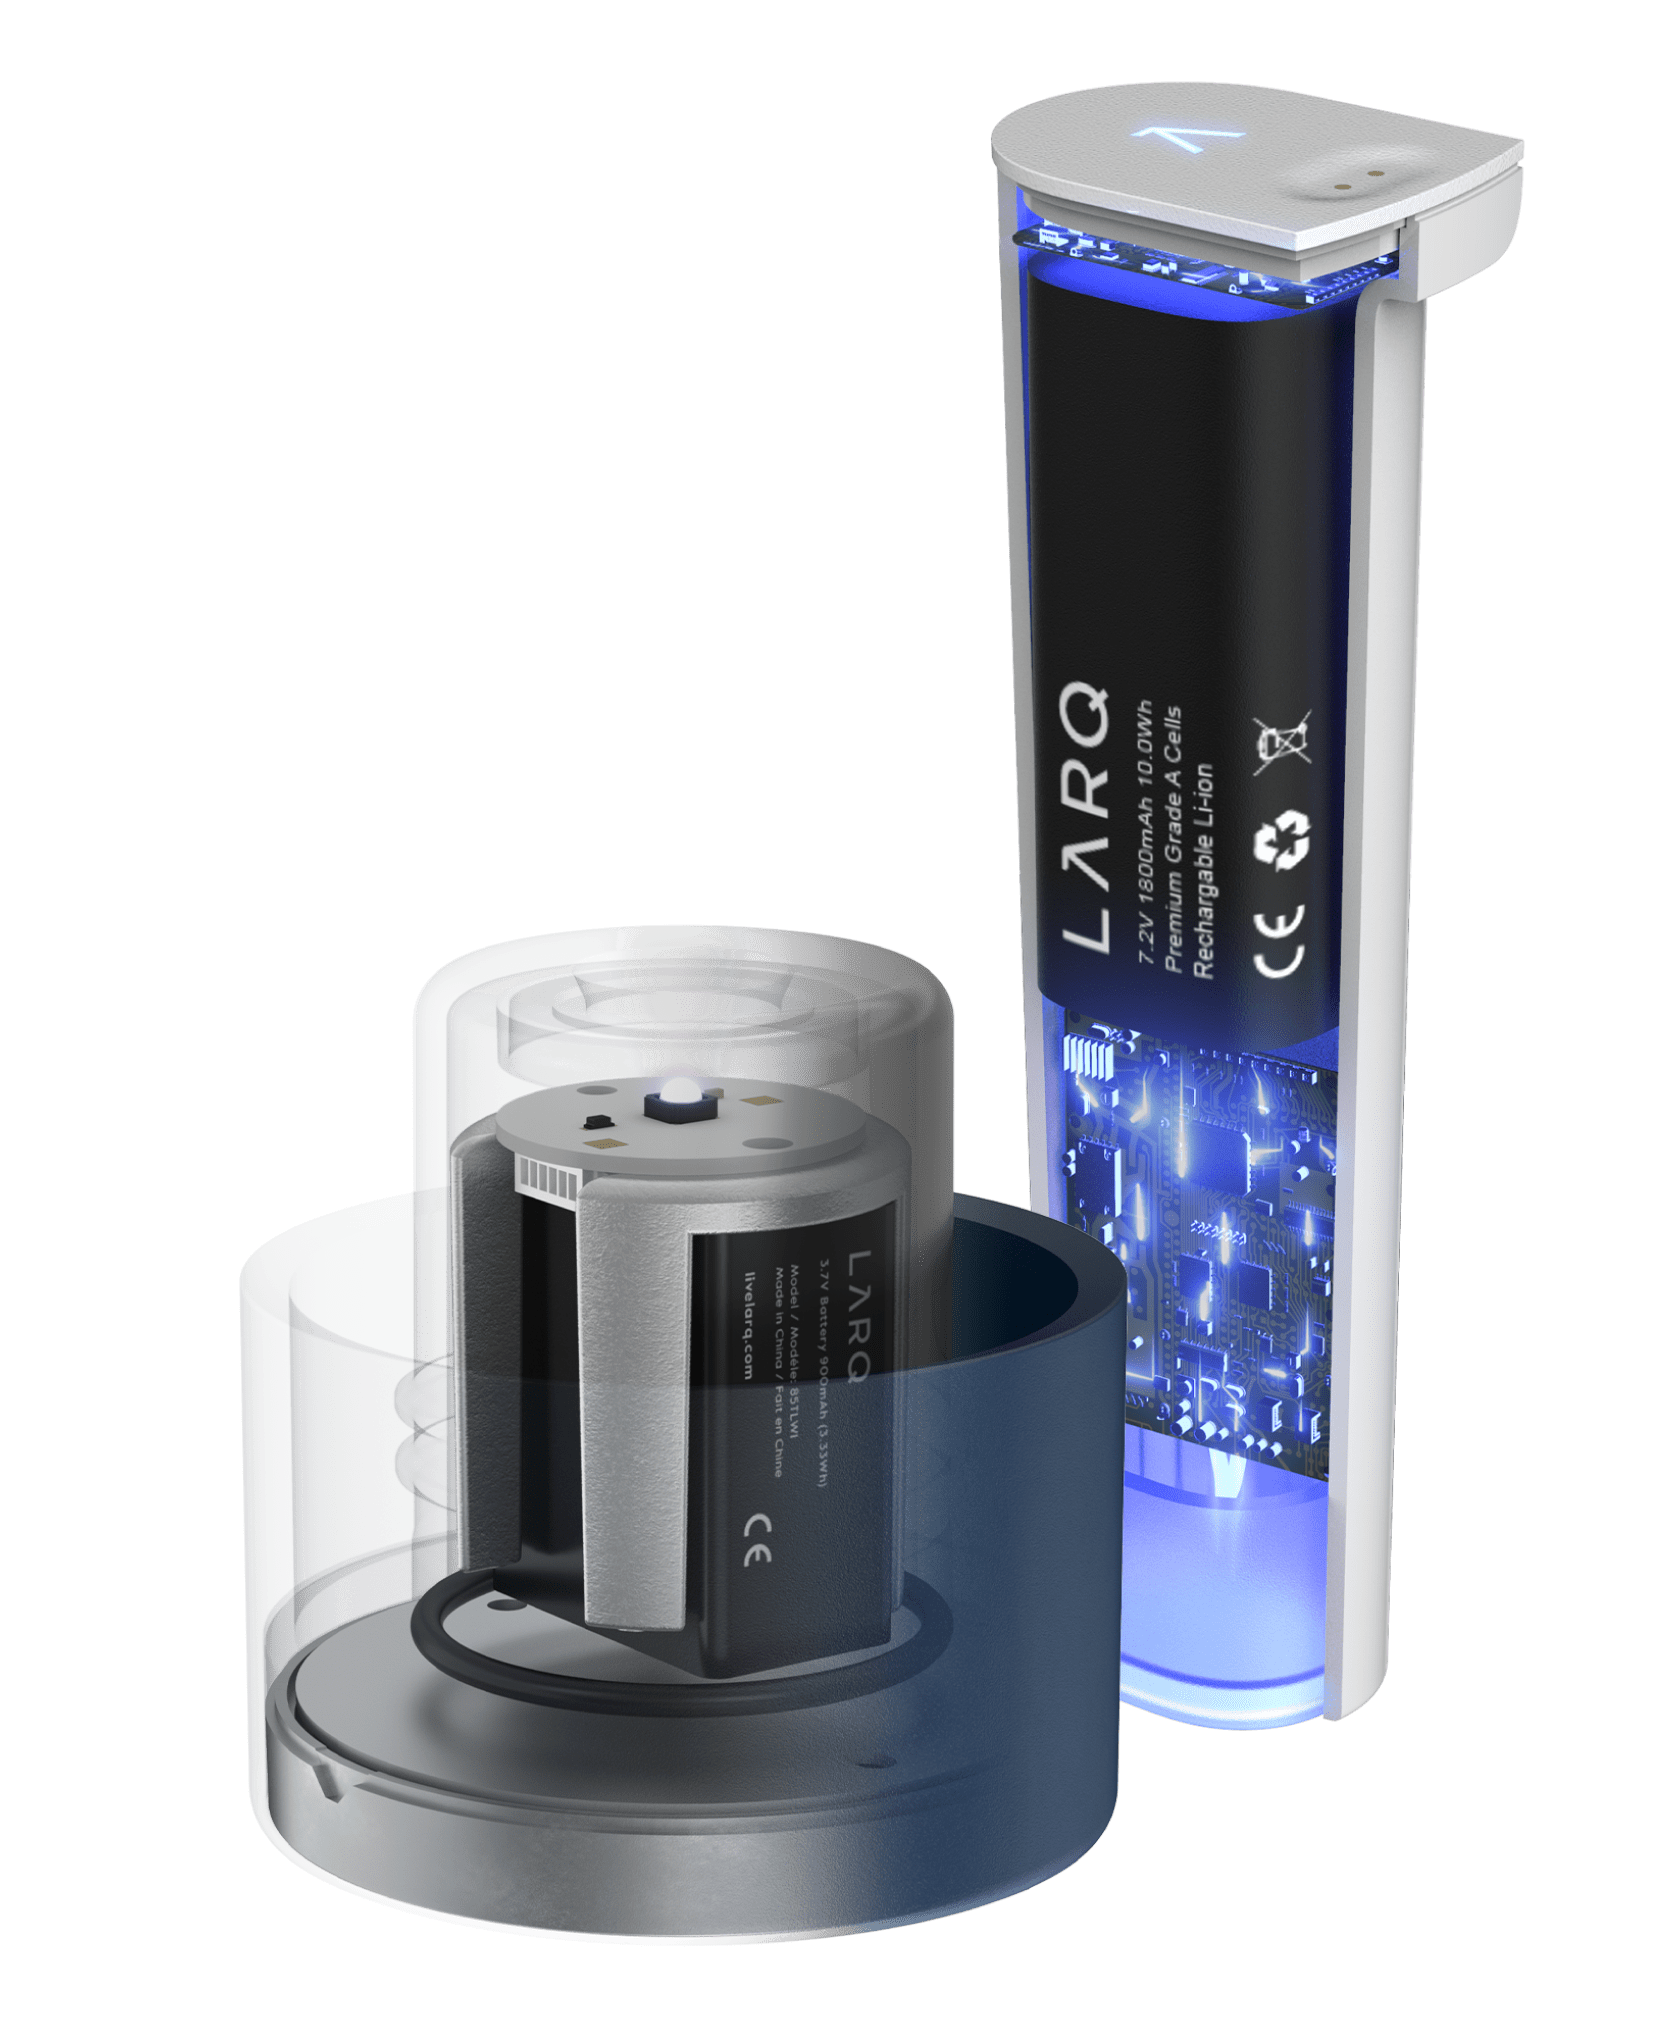 Product Deep Dive: LARQ Bottle Filtered